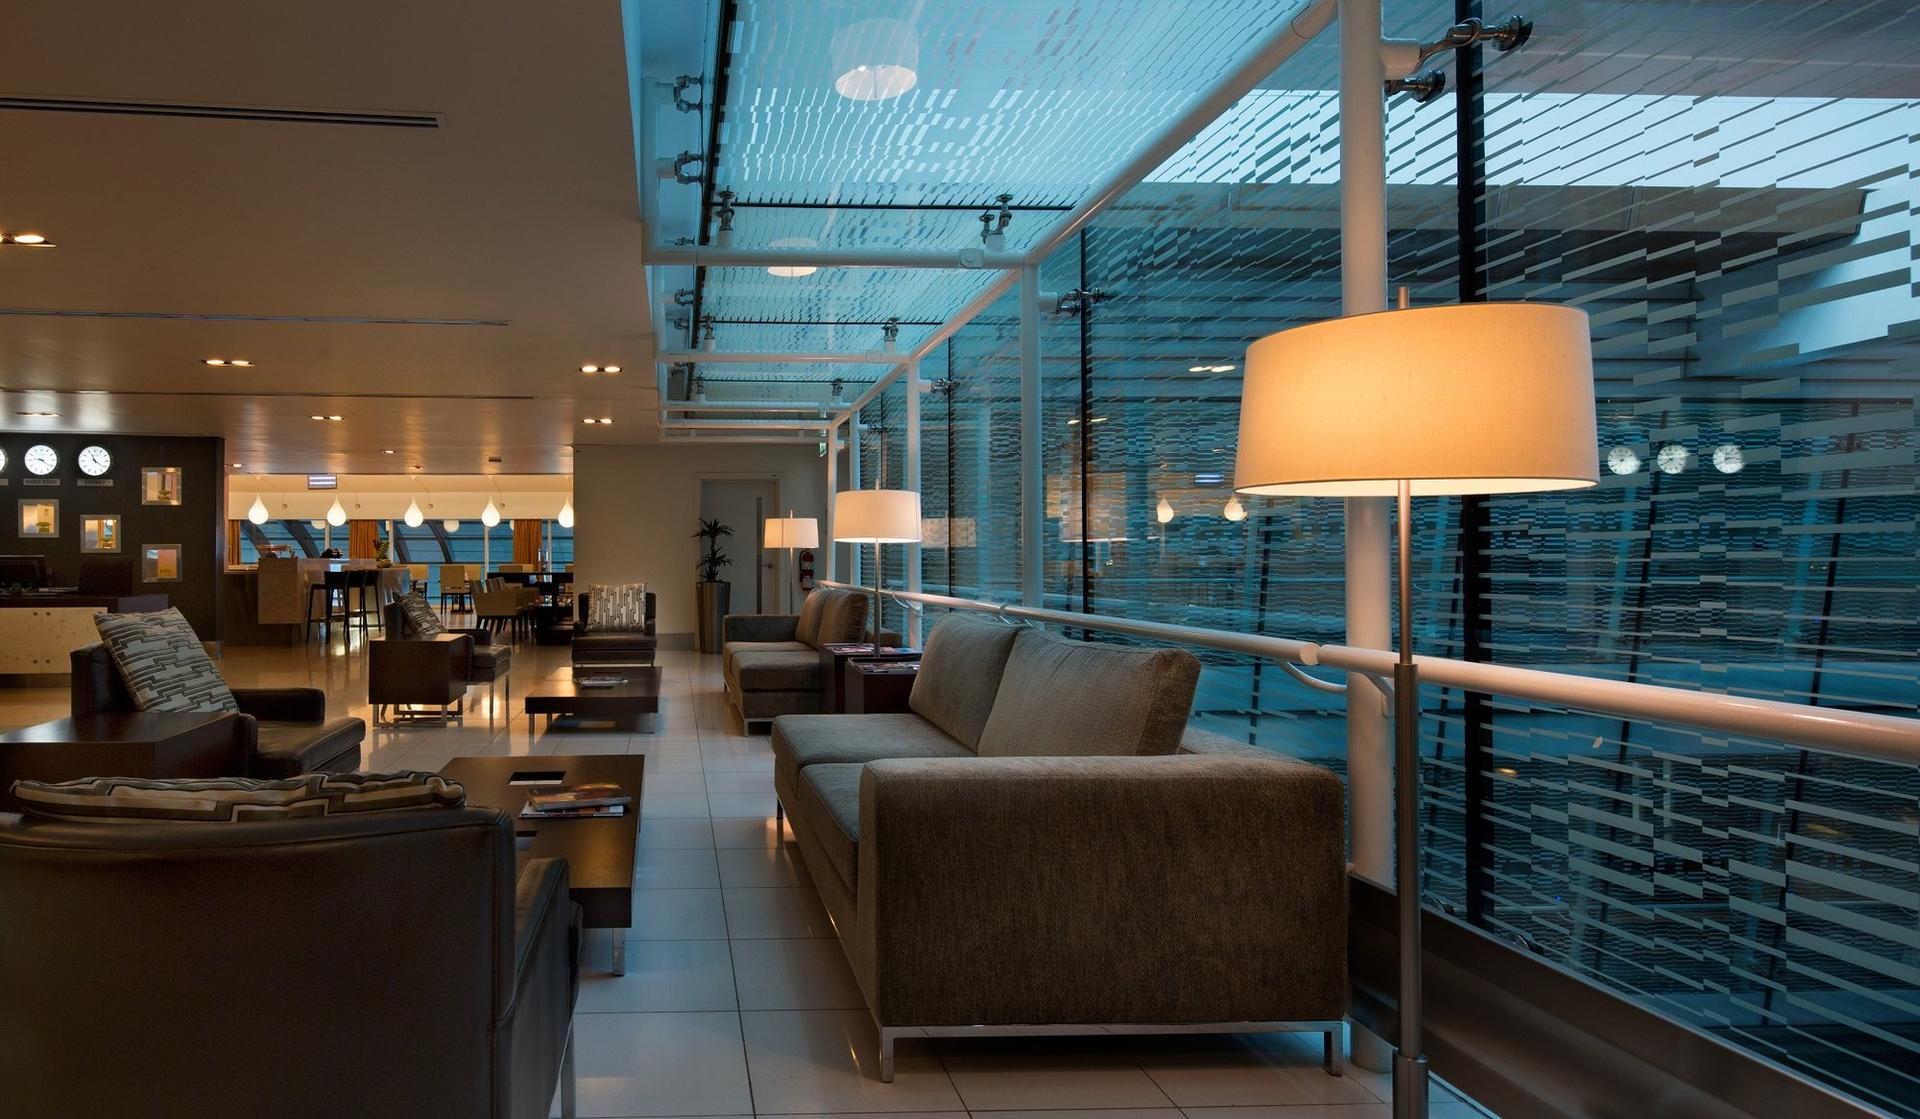 Dubai International Hotel (Concourse B) image 23 of 25